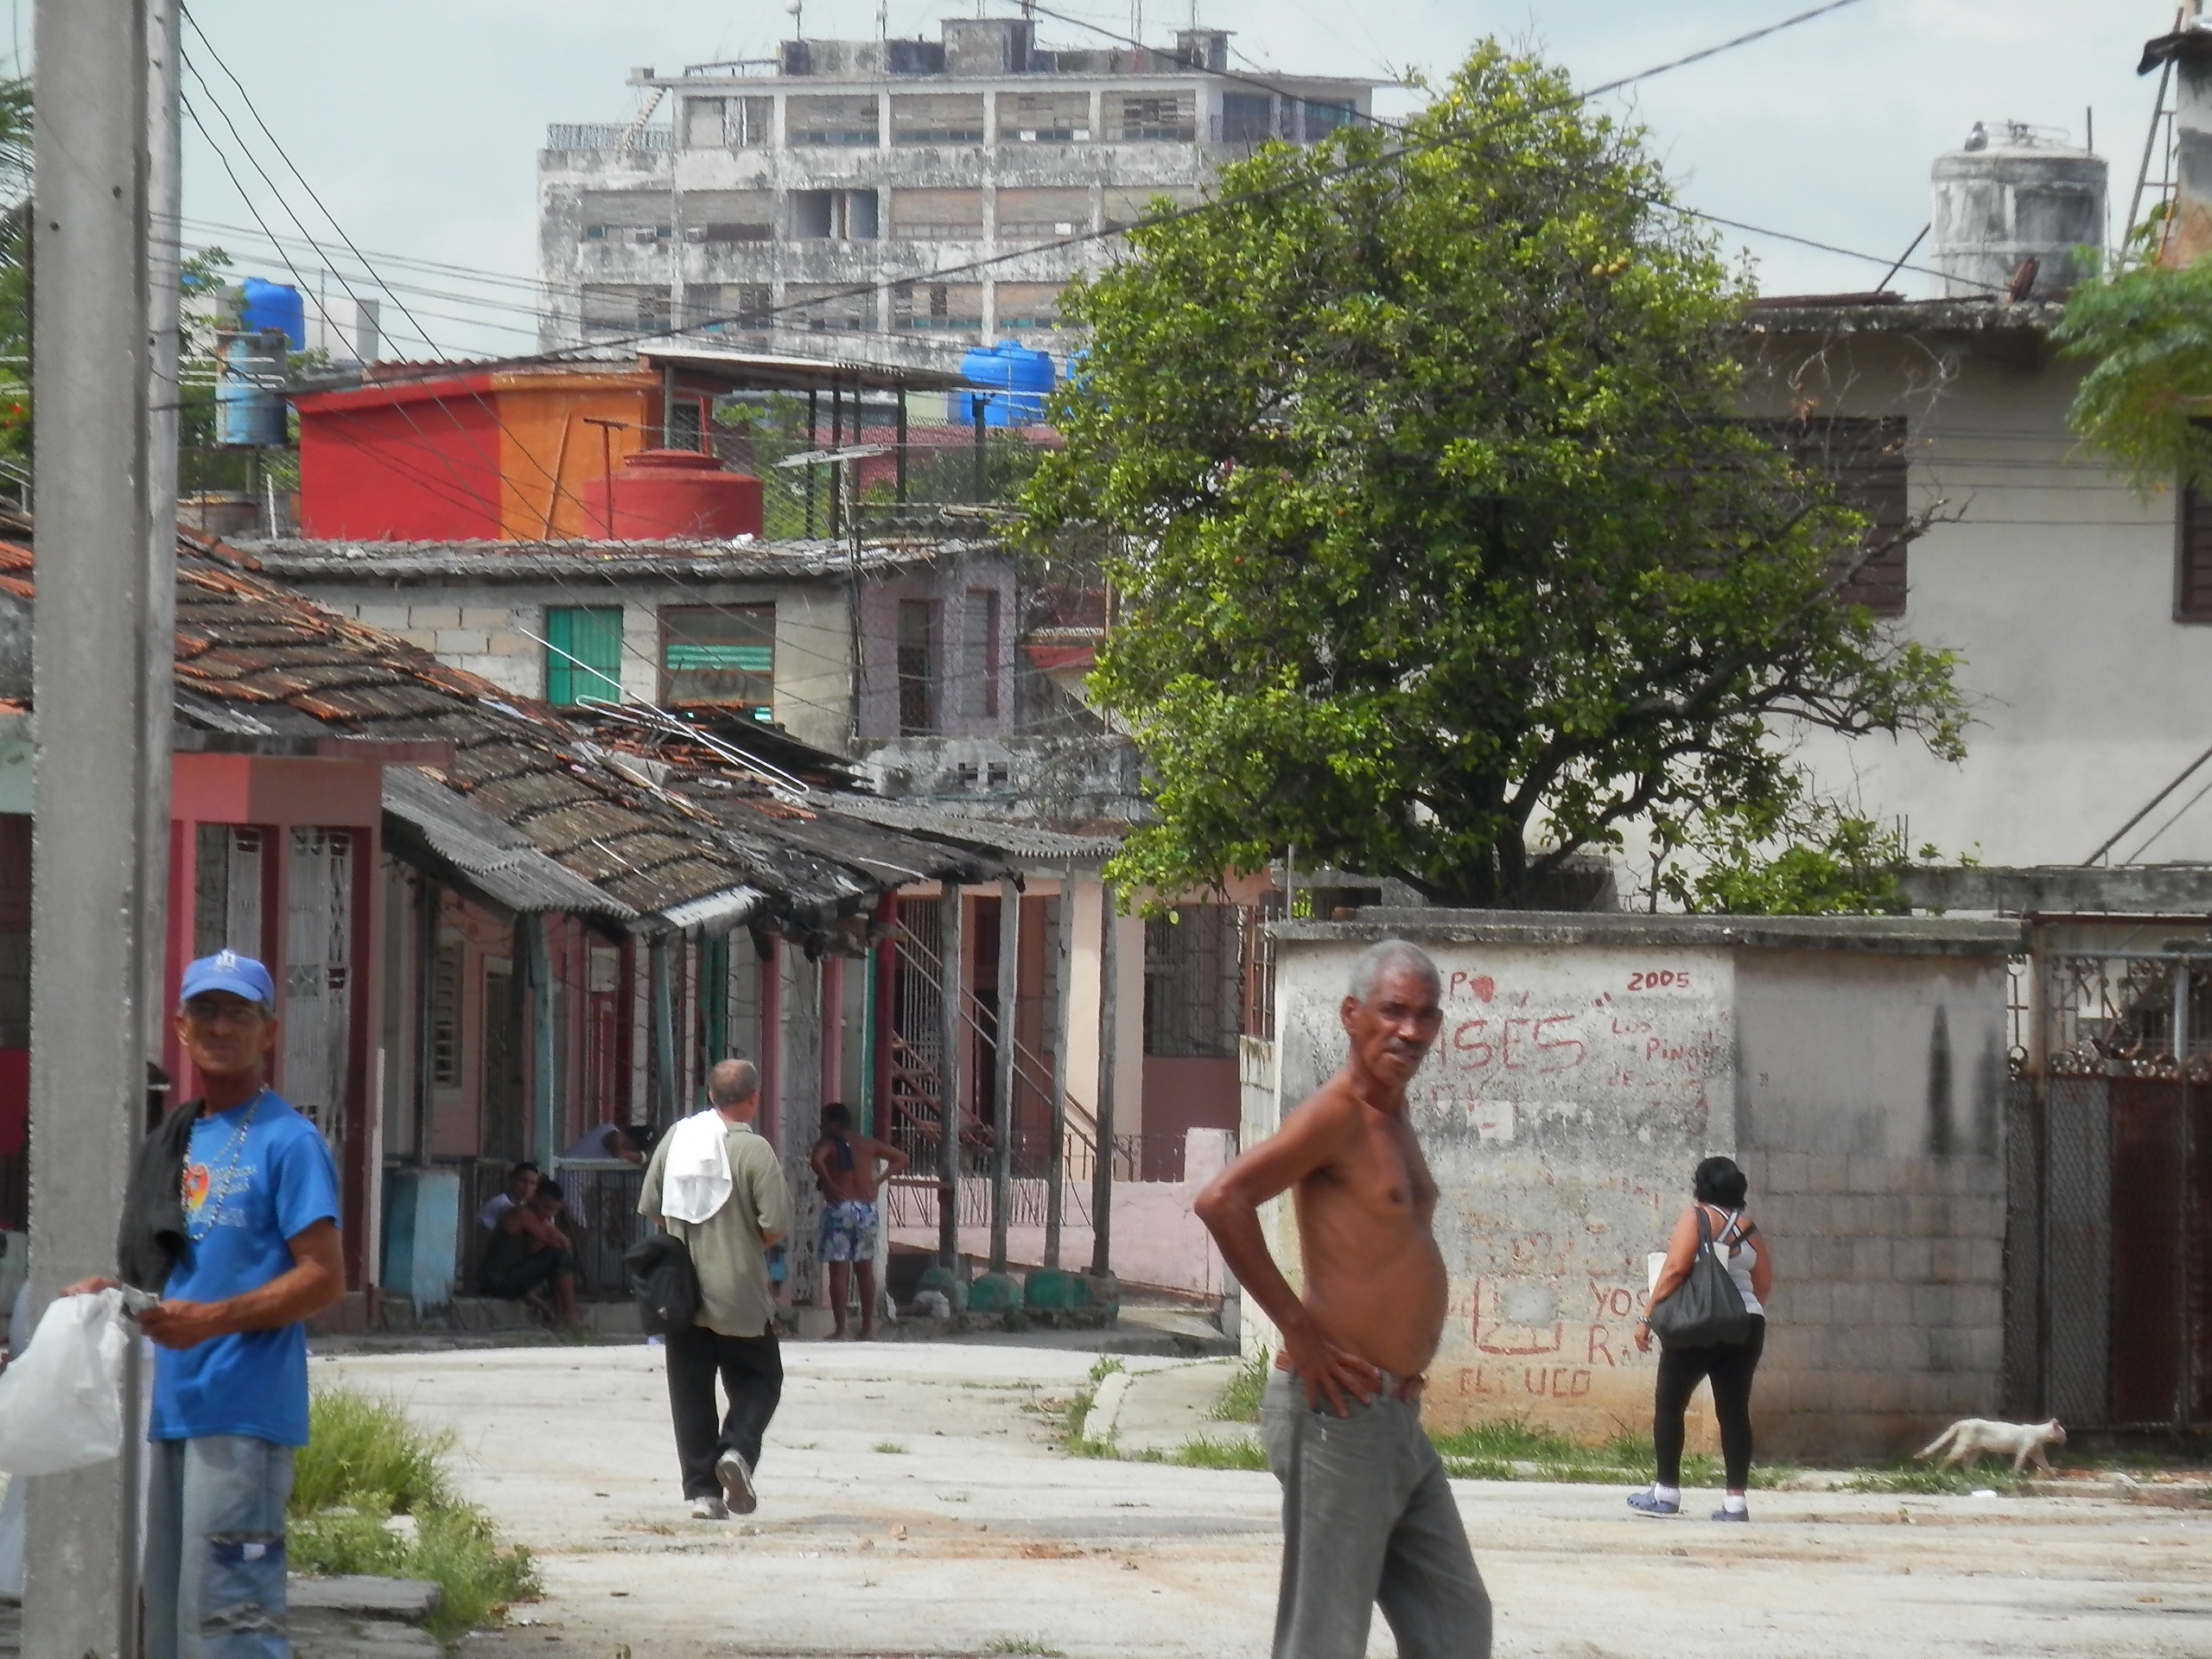 A busy street in the southwestern Havana slum where I stayed. 